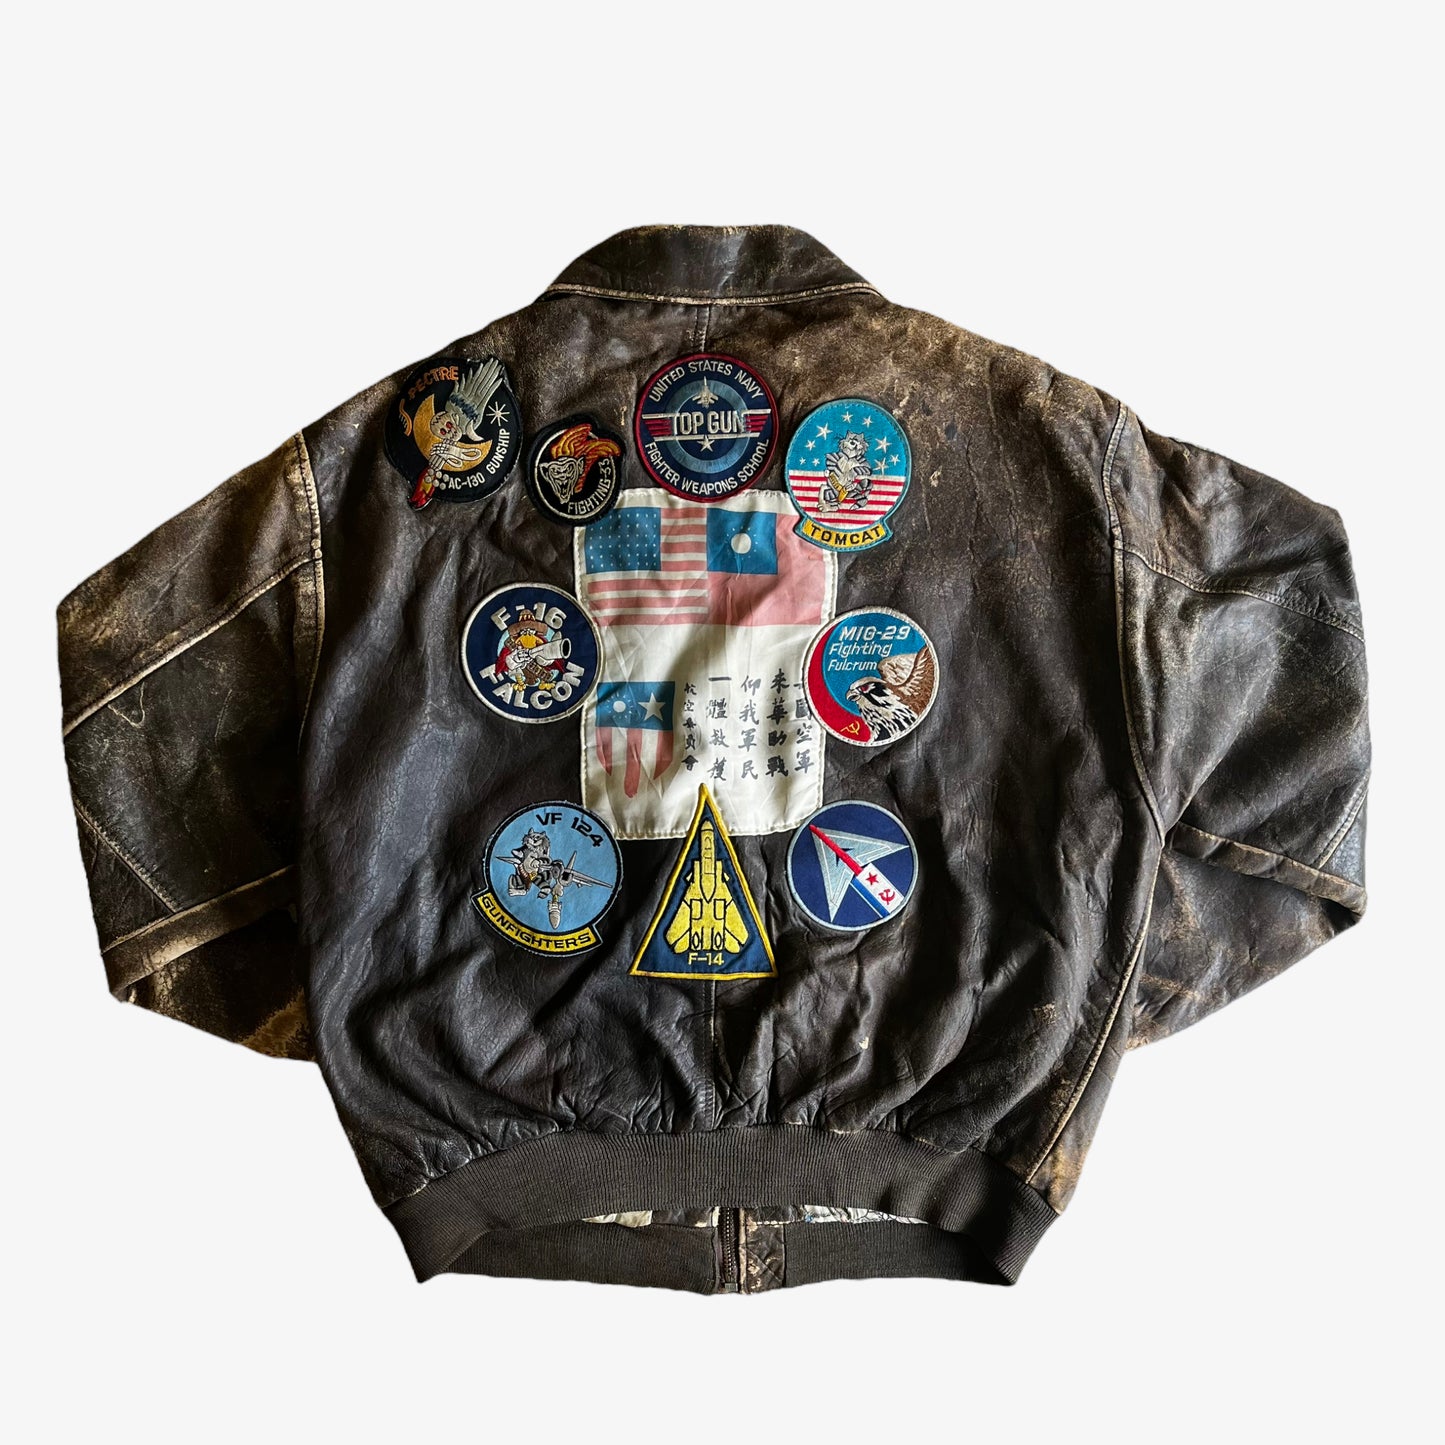 Vintage 80s AVIREX 1986 Original Top Gun Movie Promotional Leather Pilot Jacket Back - Casspios Dream